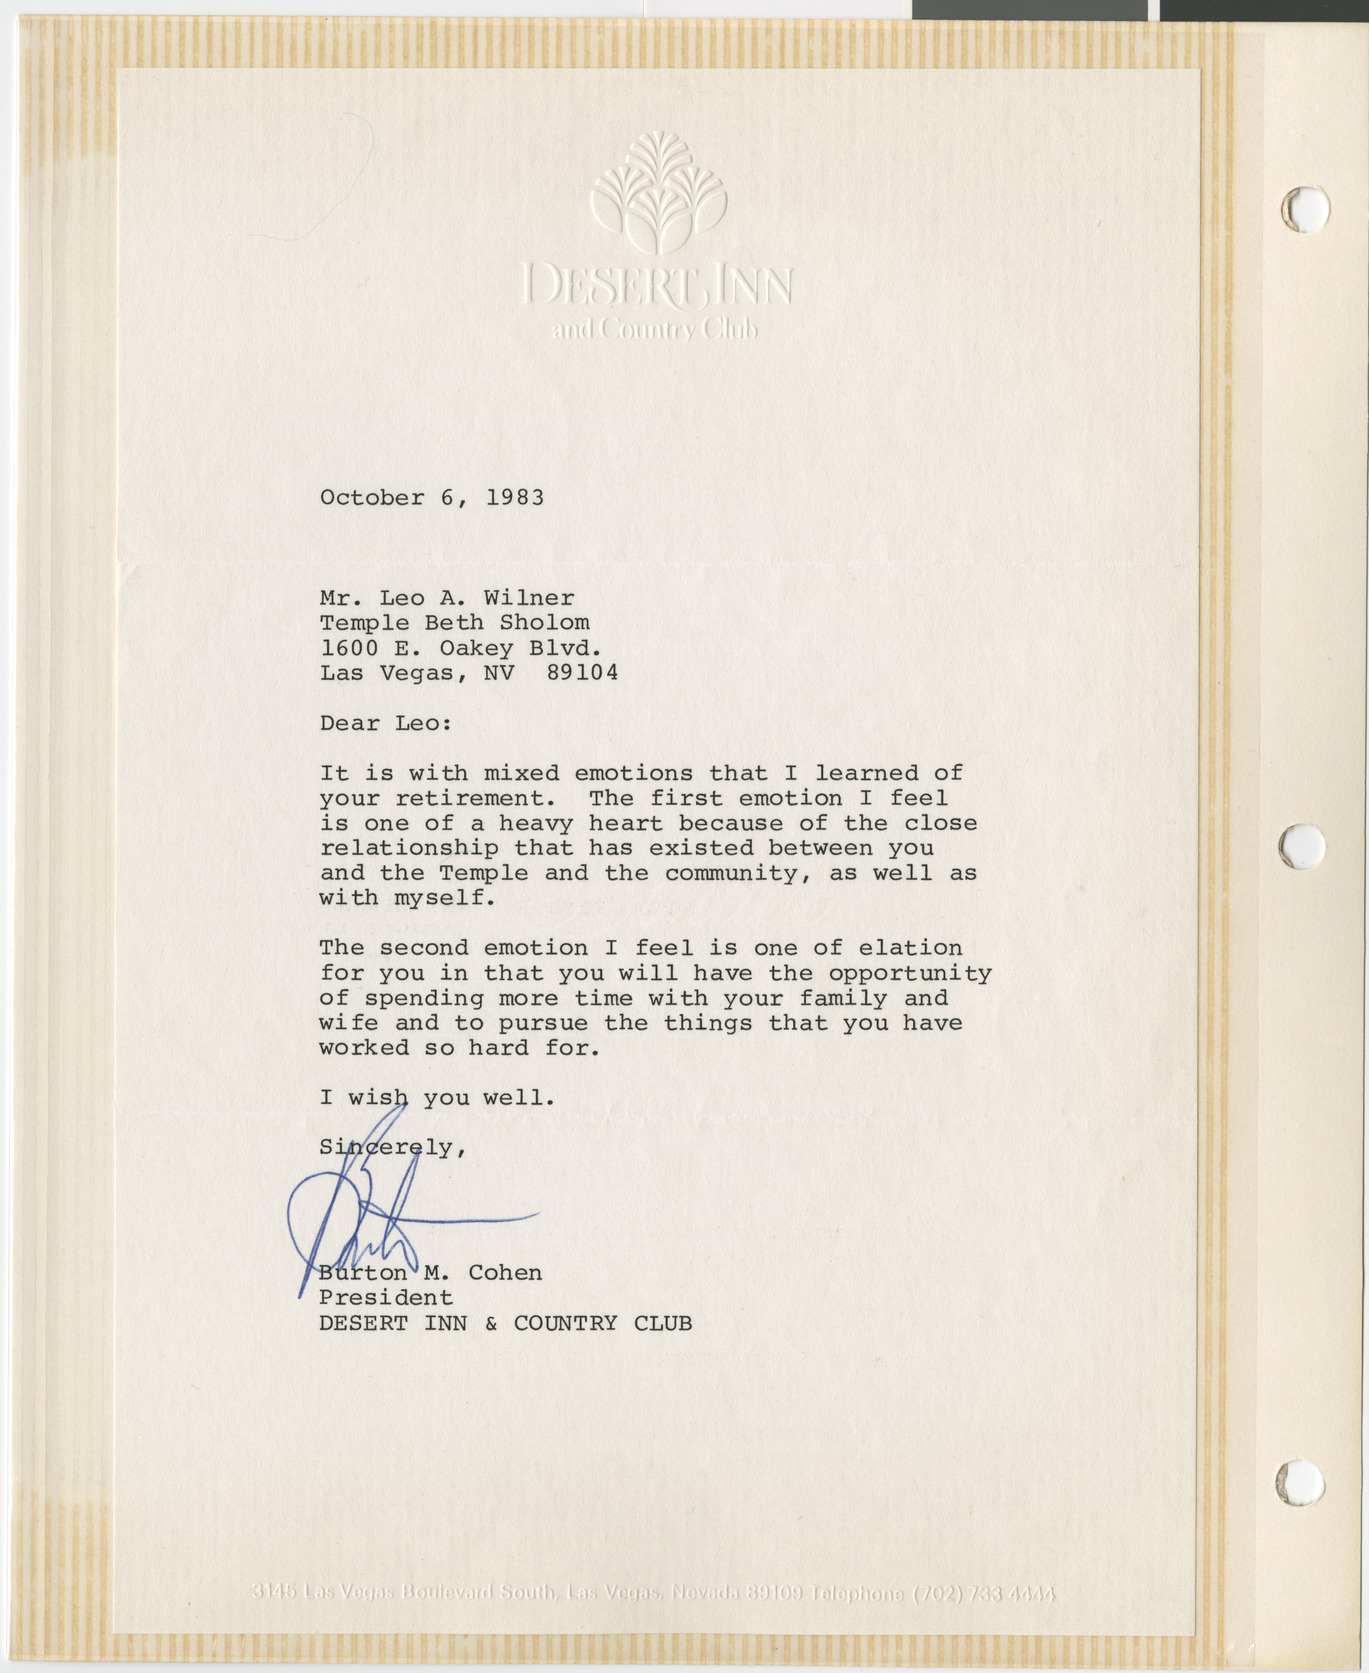 Letter from Burton M. Cohen (Desert Inn and Country Club), to Leo Wilner, October 6, 1983